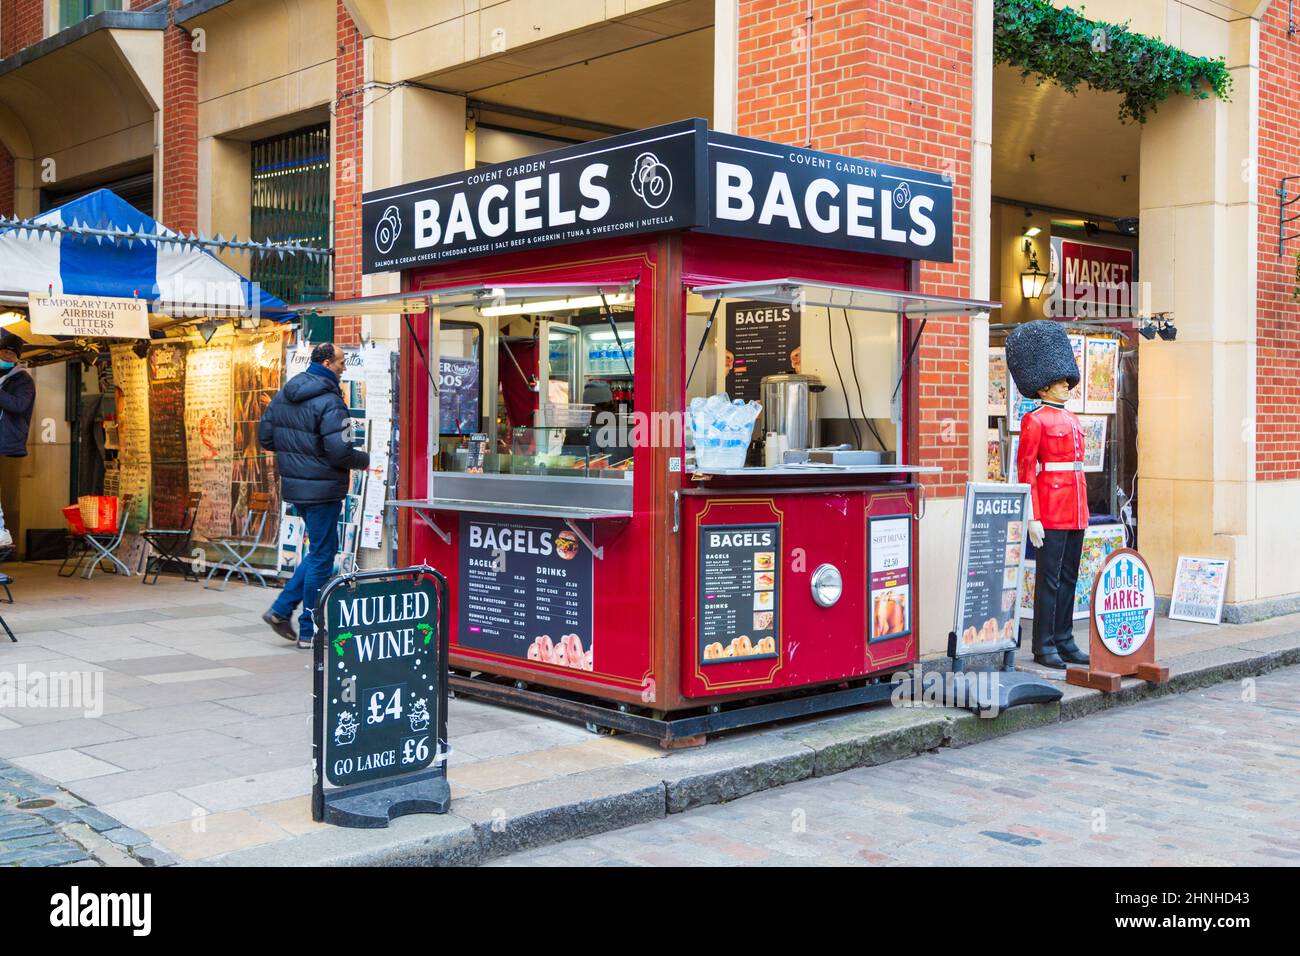 Bagels, covent garden market stall, london, uk Stock Photo